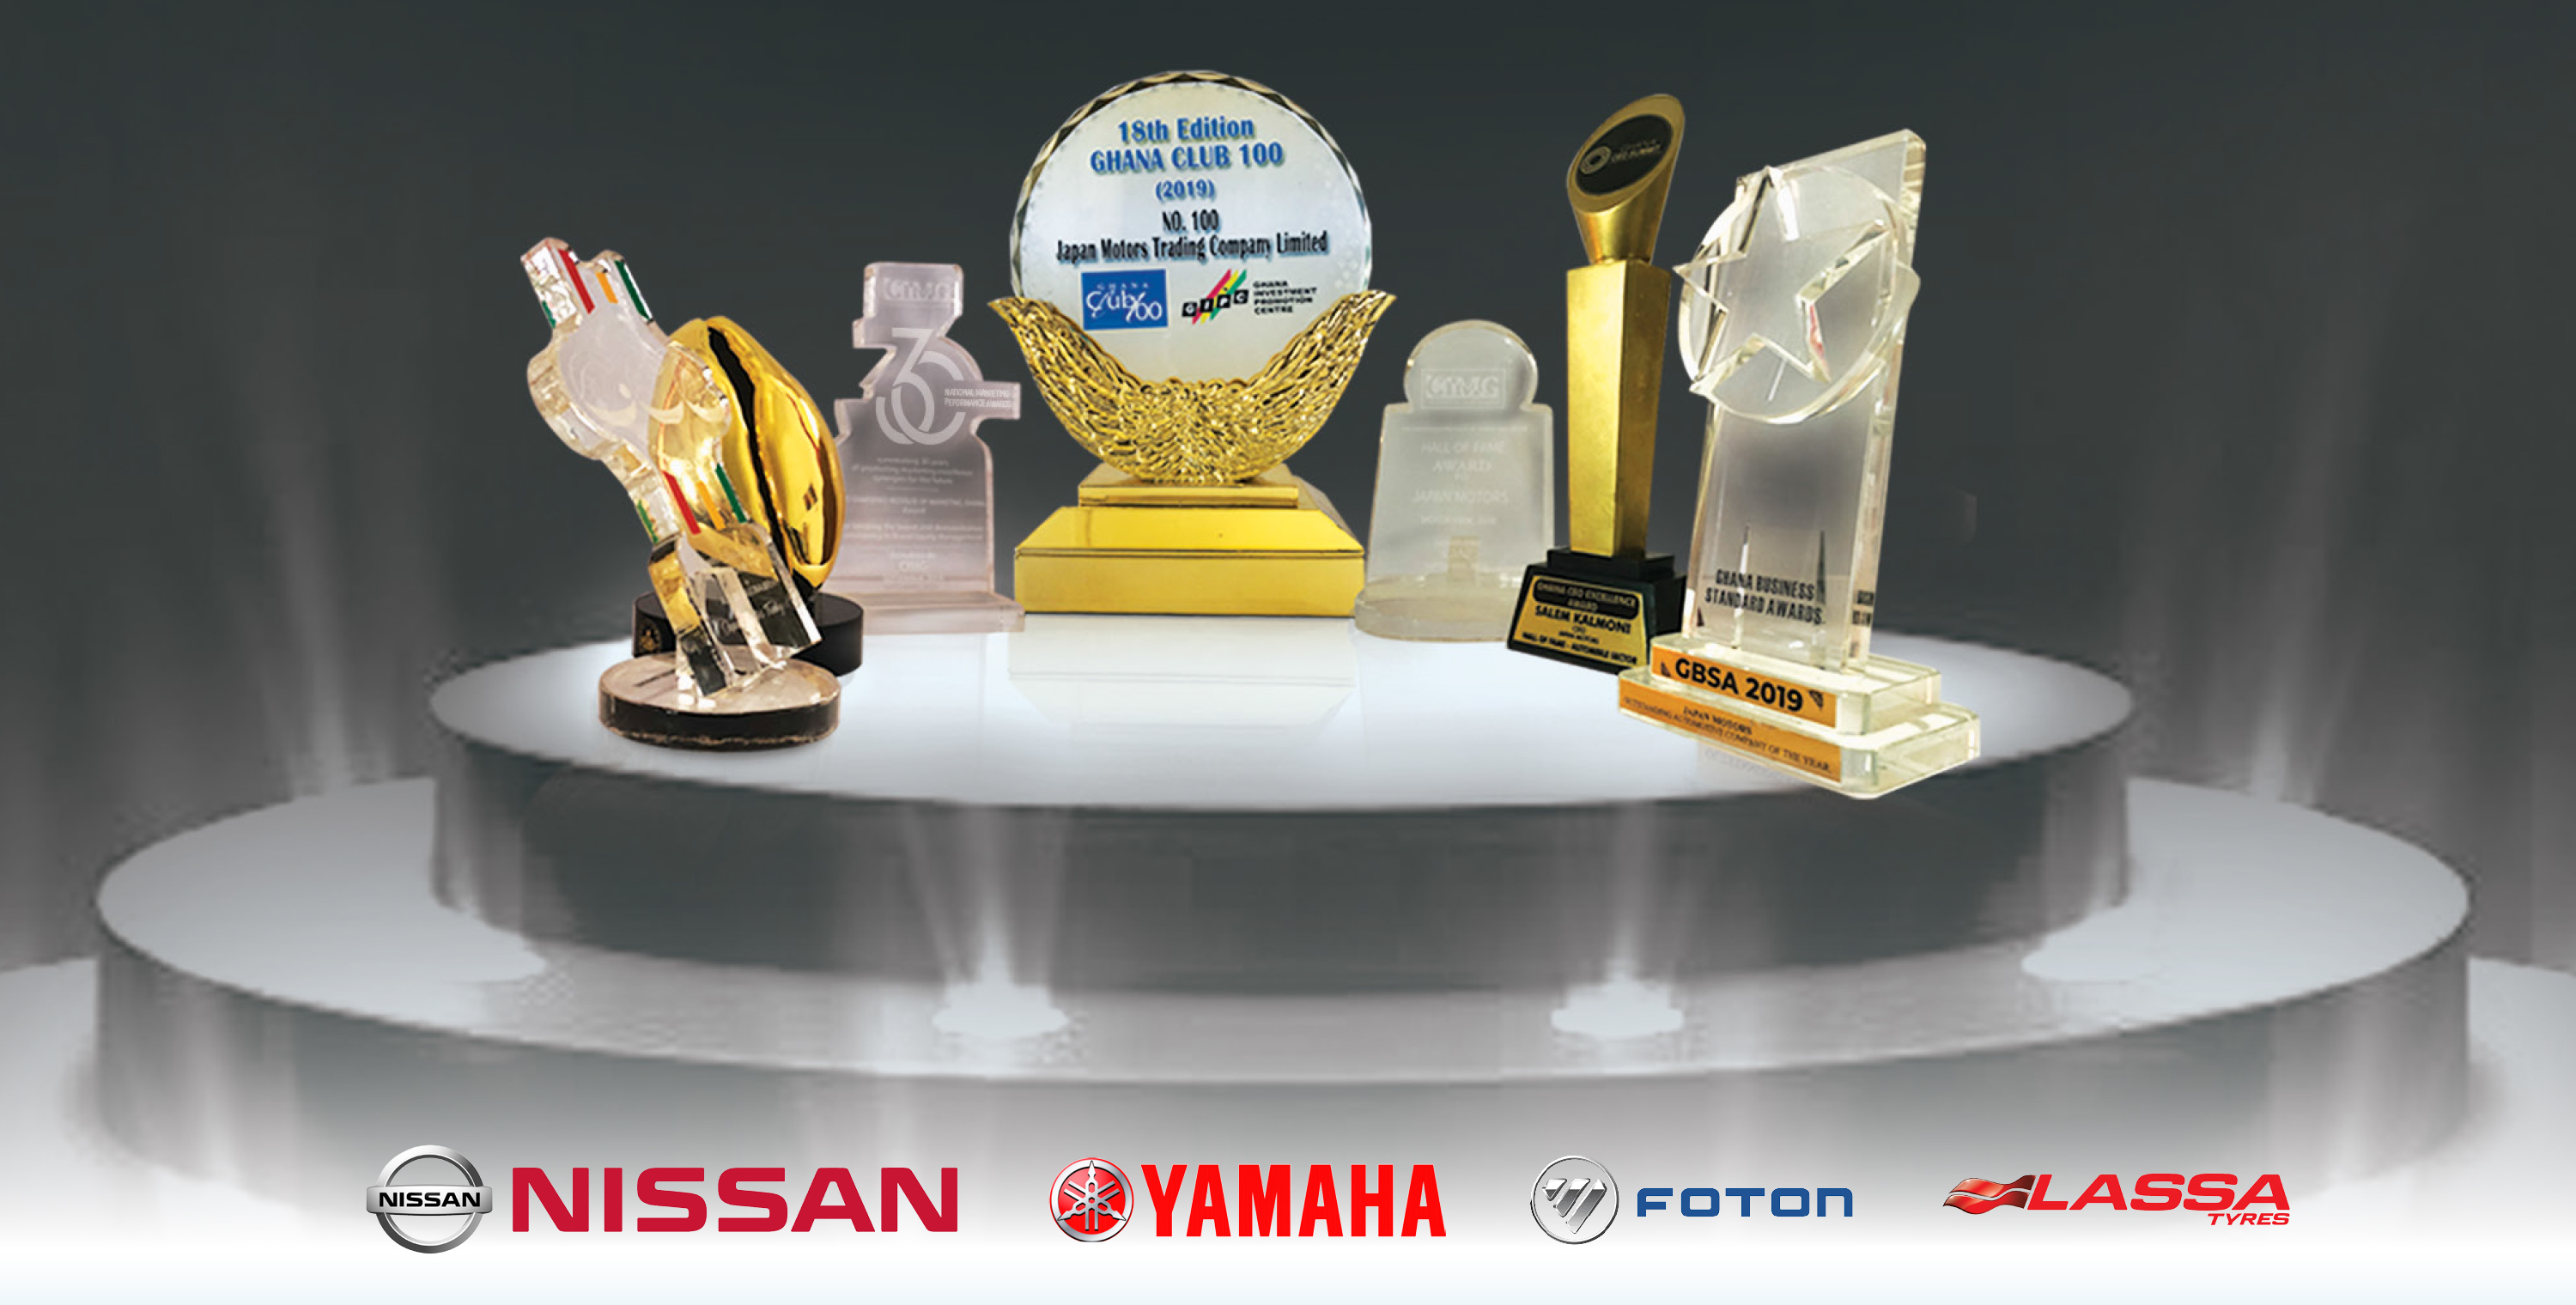 Awards About Japan Motors